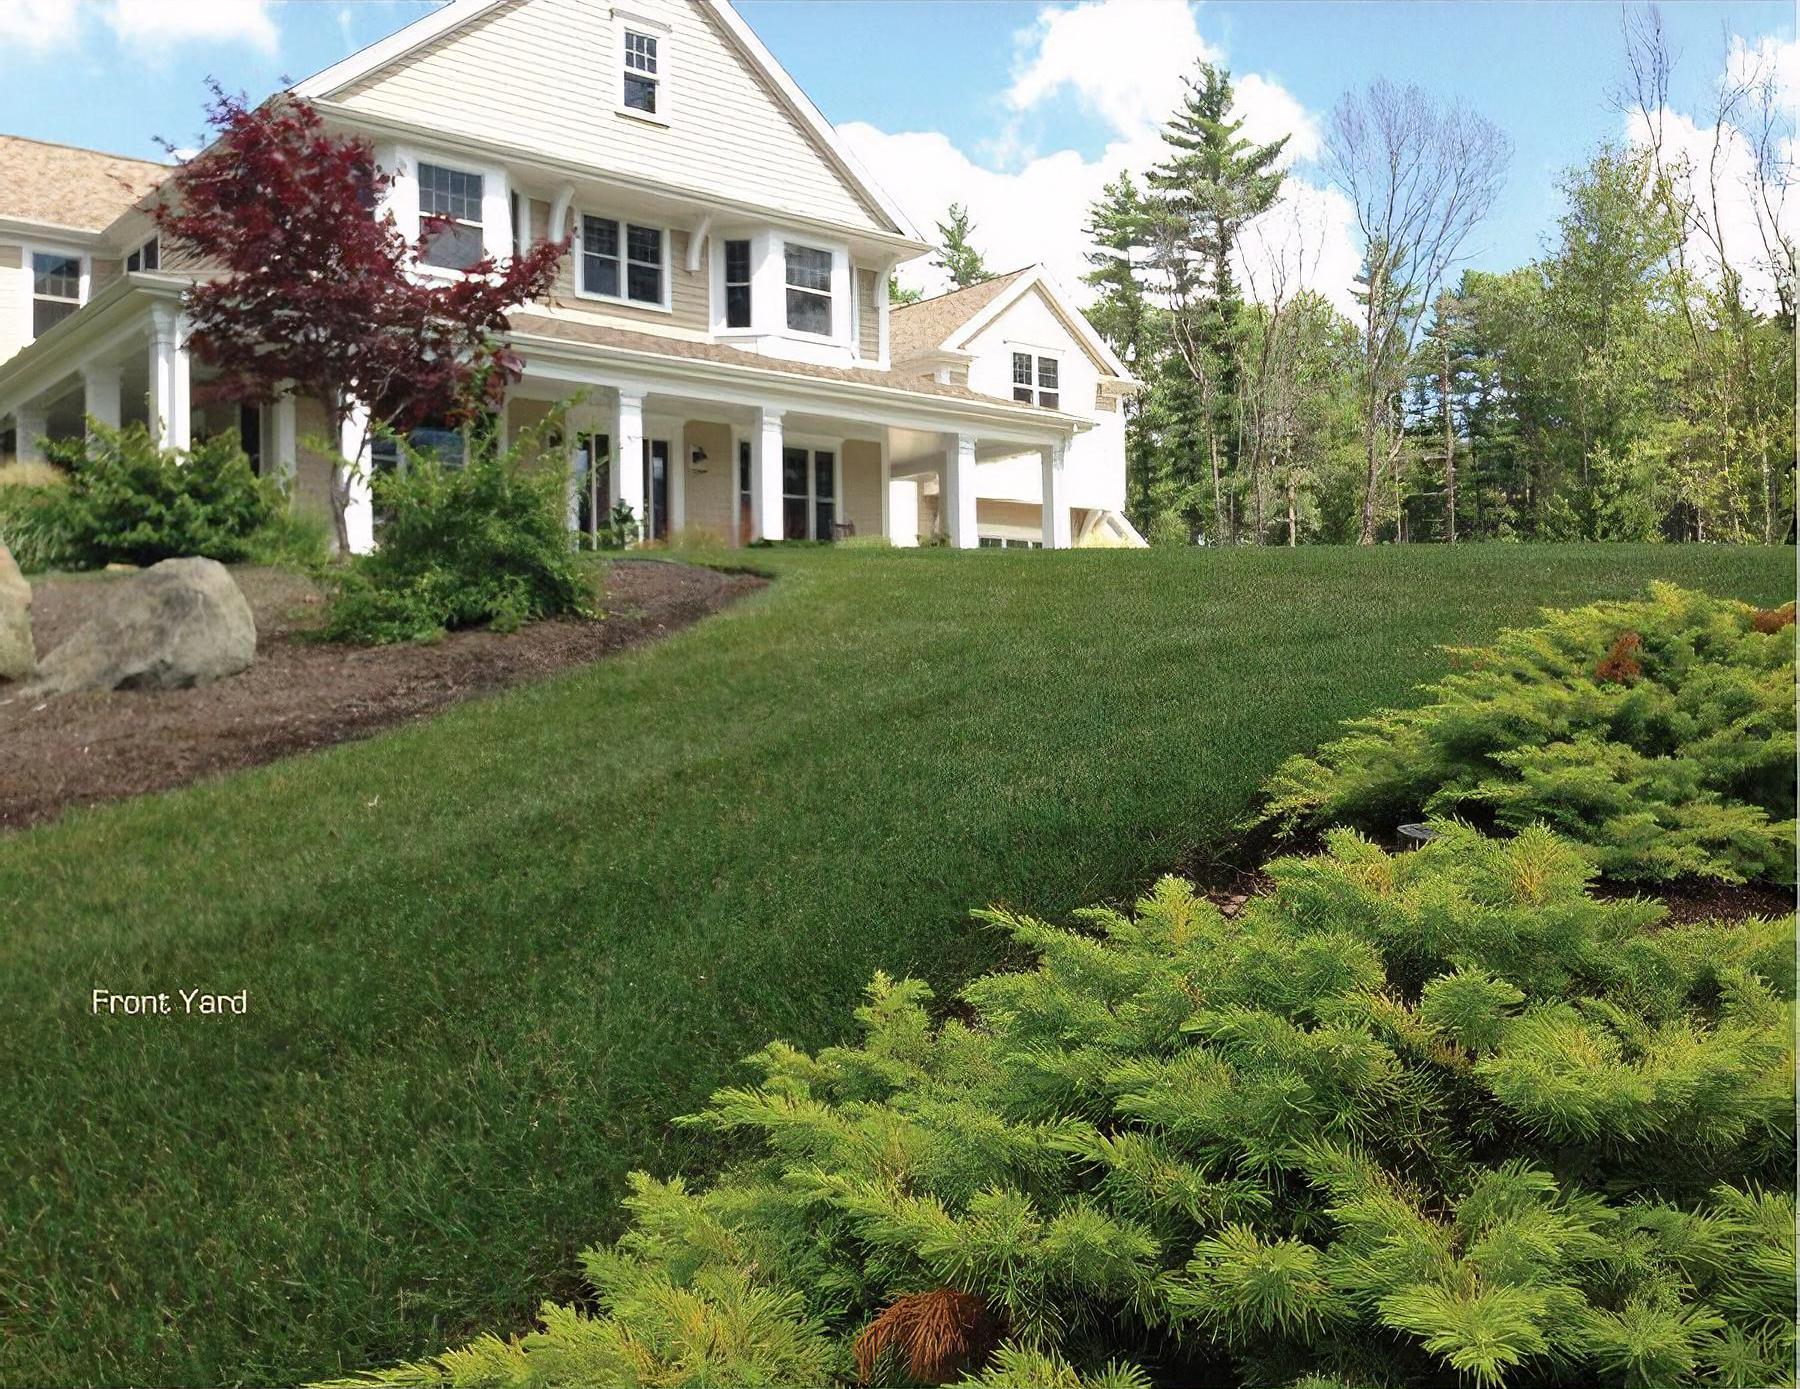 A Multi-generational Suburban Home Garden by Rhode Island garden designer Shawn Mayers.